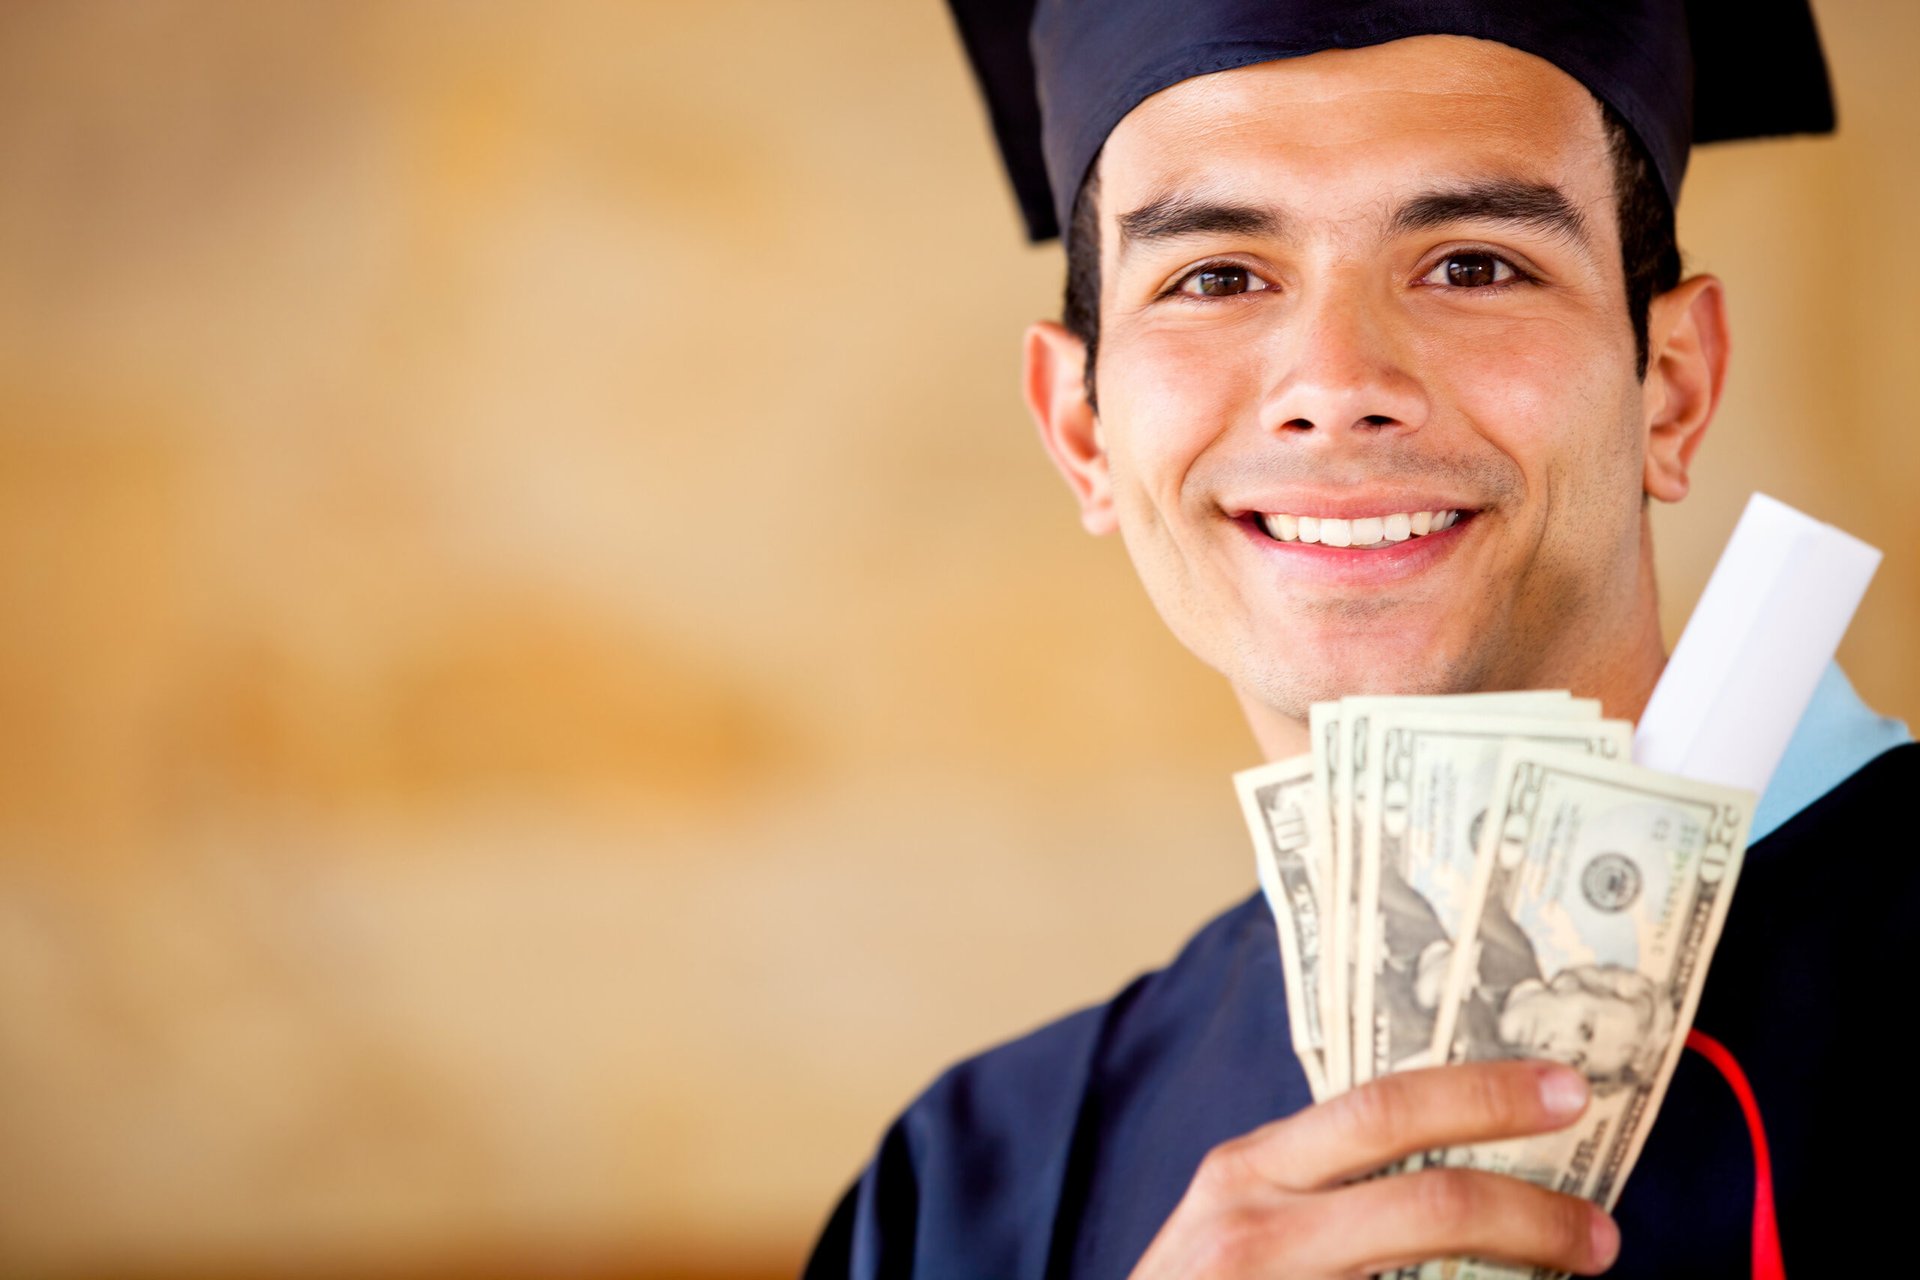 Recent college graduate holding money, specifically $20 bills in cash